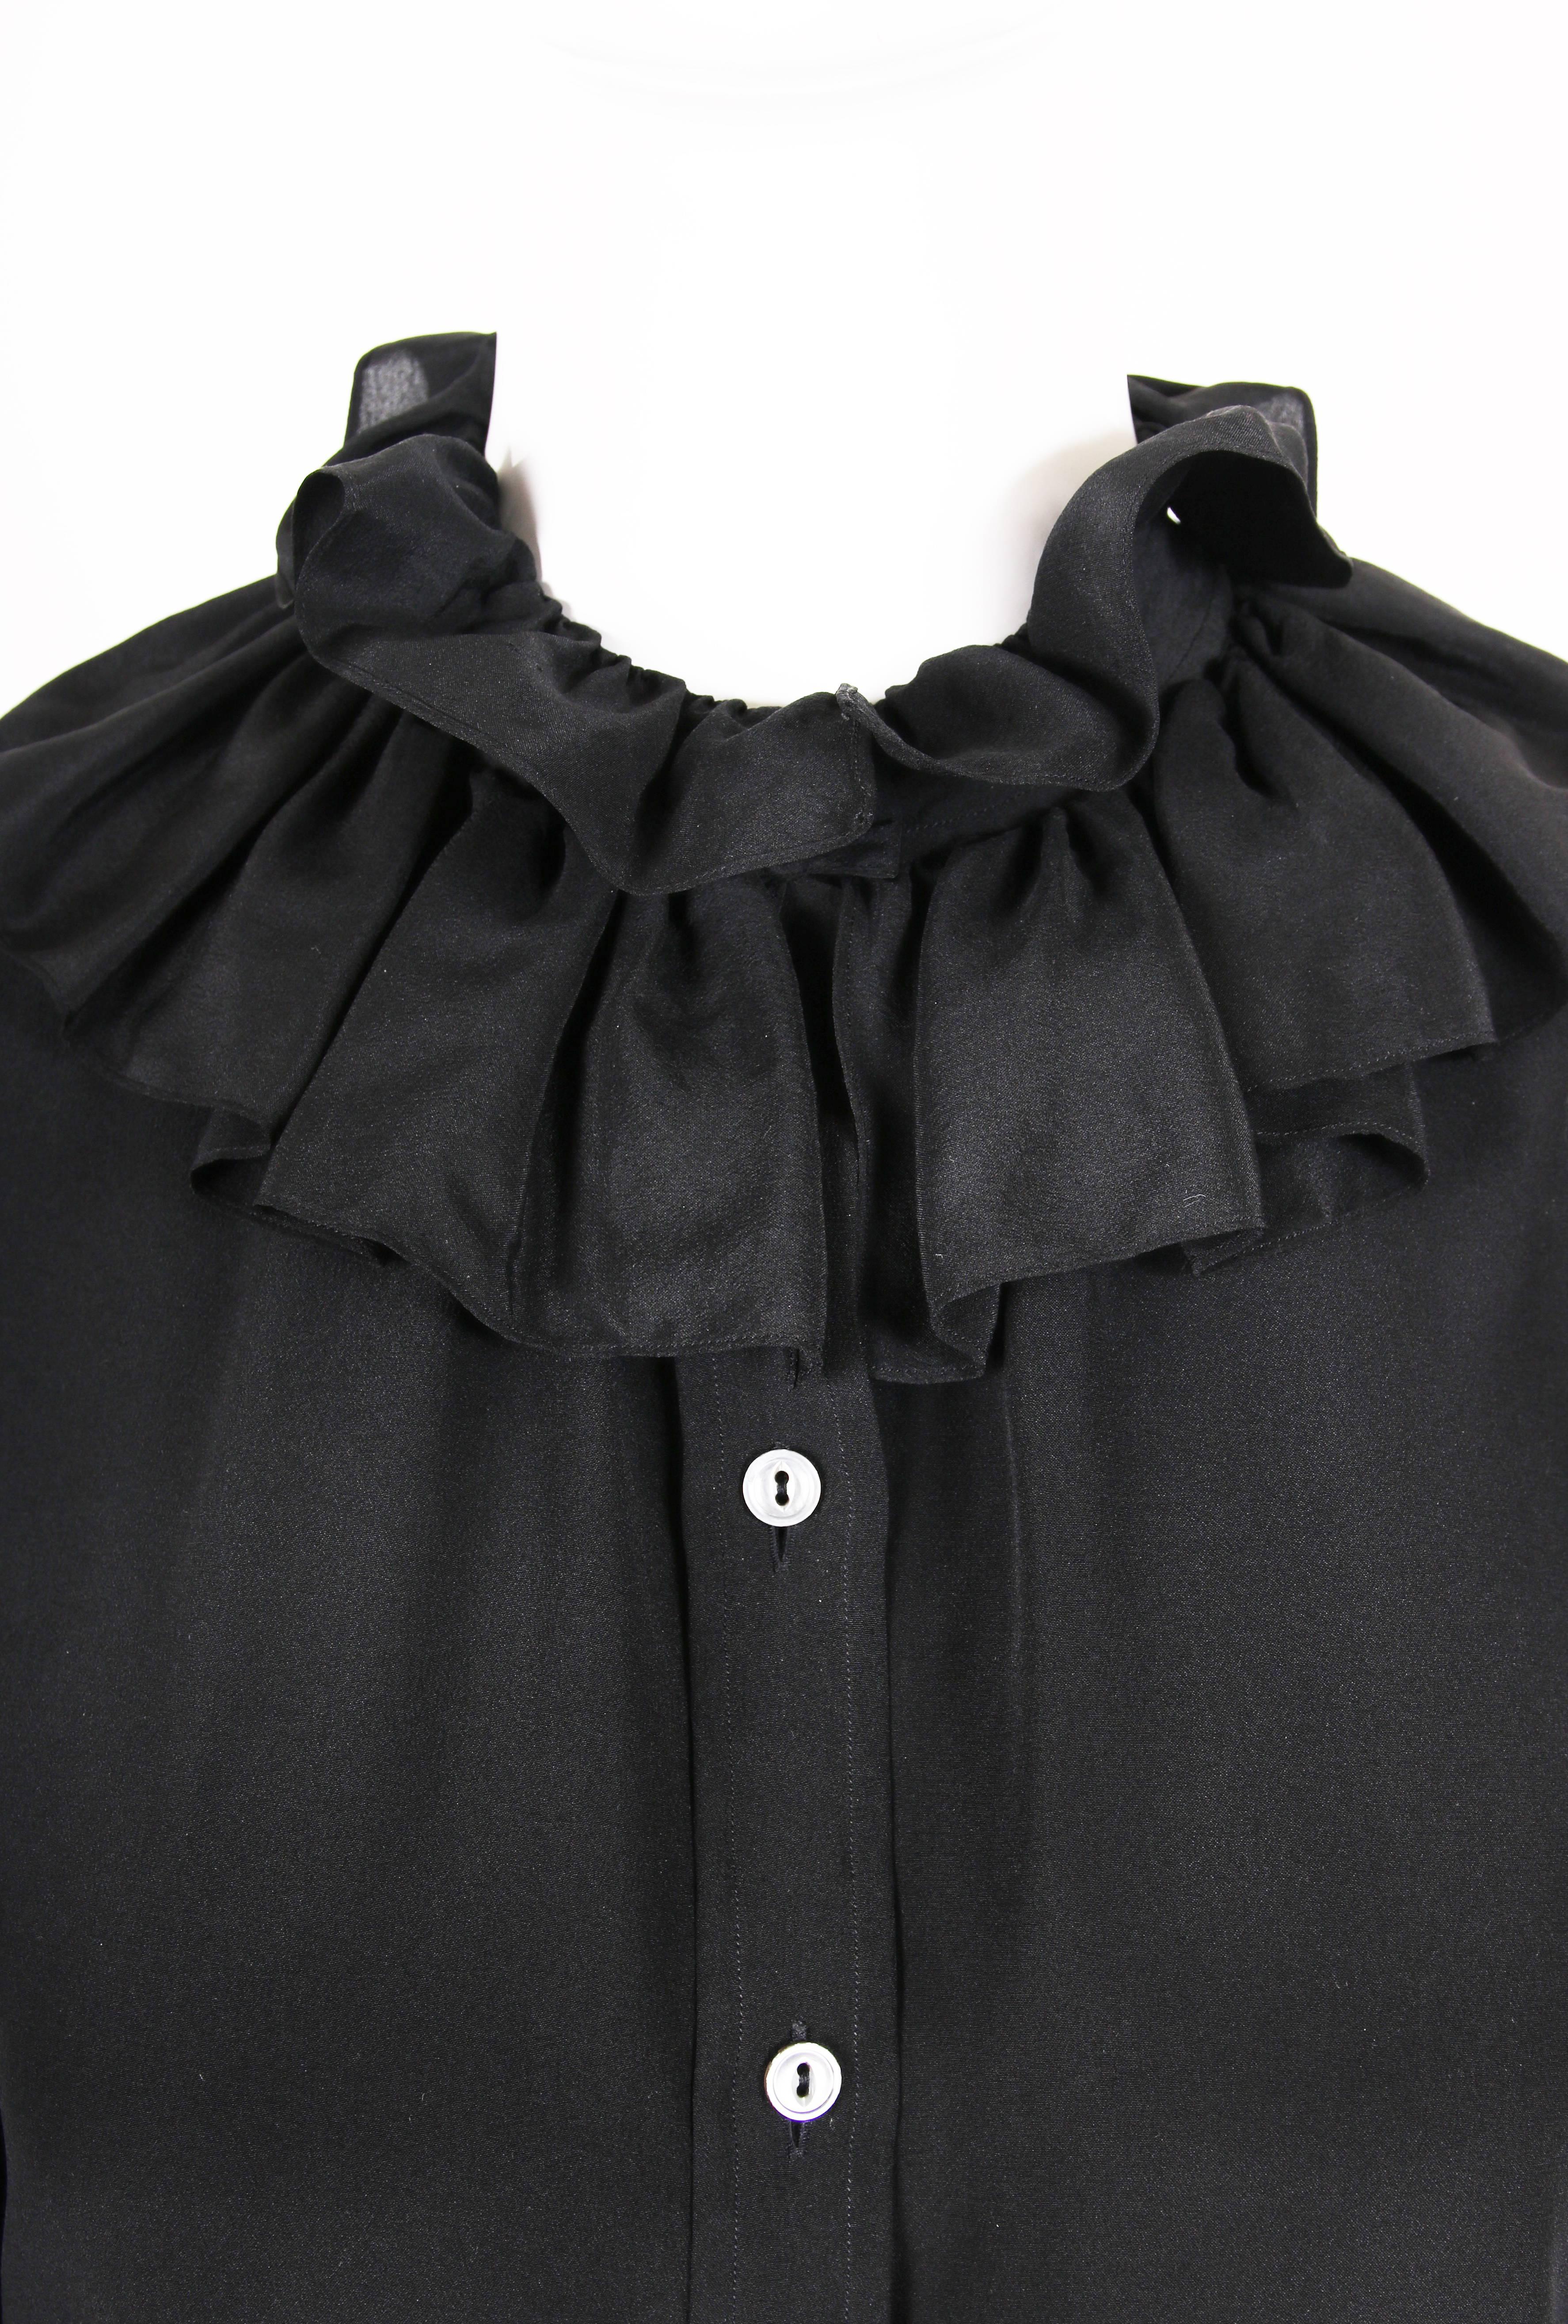 Yves Saint Laurent YSL Vintage Black Silk Blouse with Ruffled Trim 2